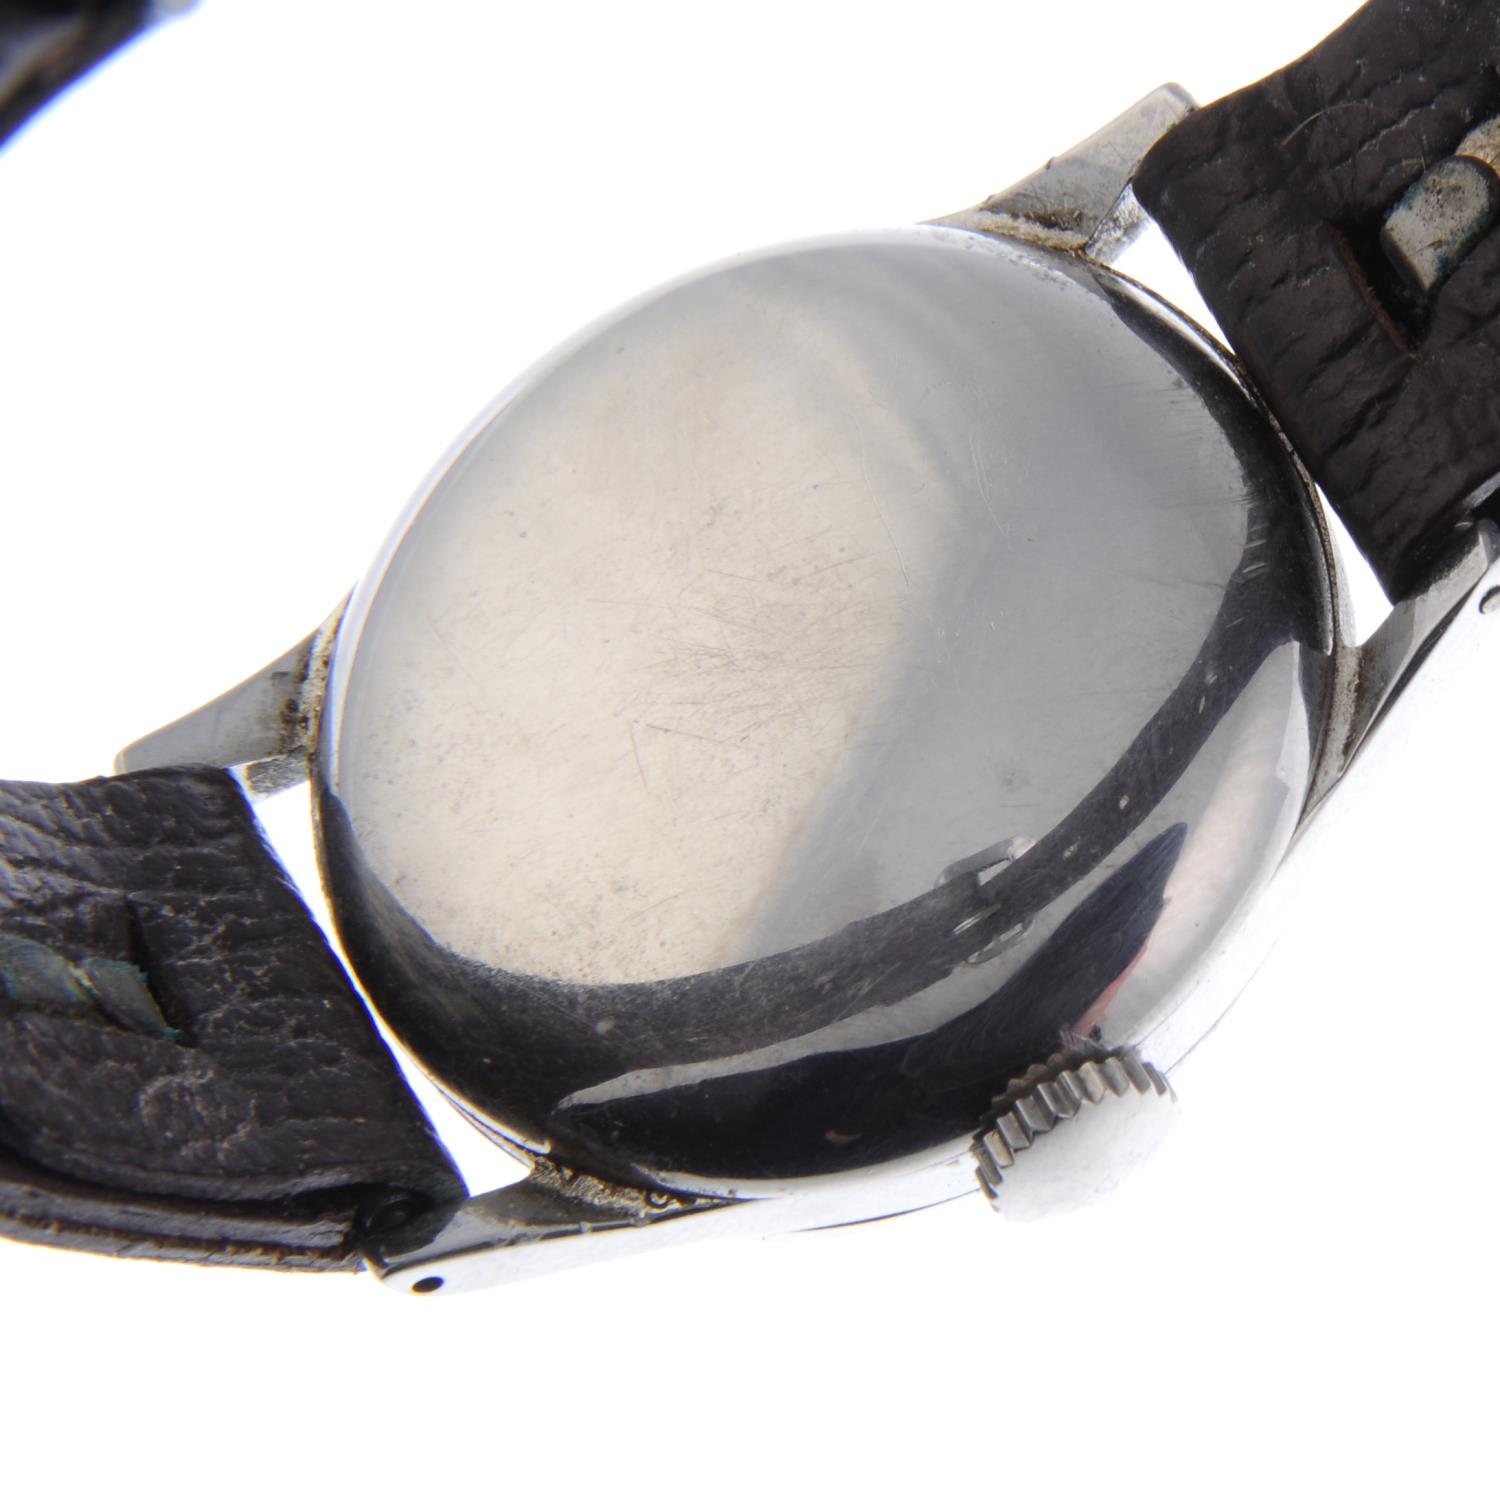 LONGINES - a gentleman's wrist watch. - Image 3 of 4